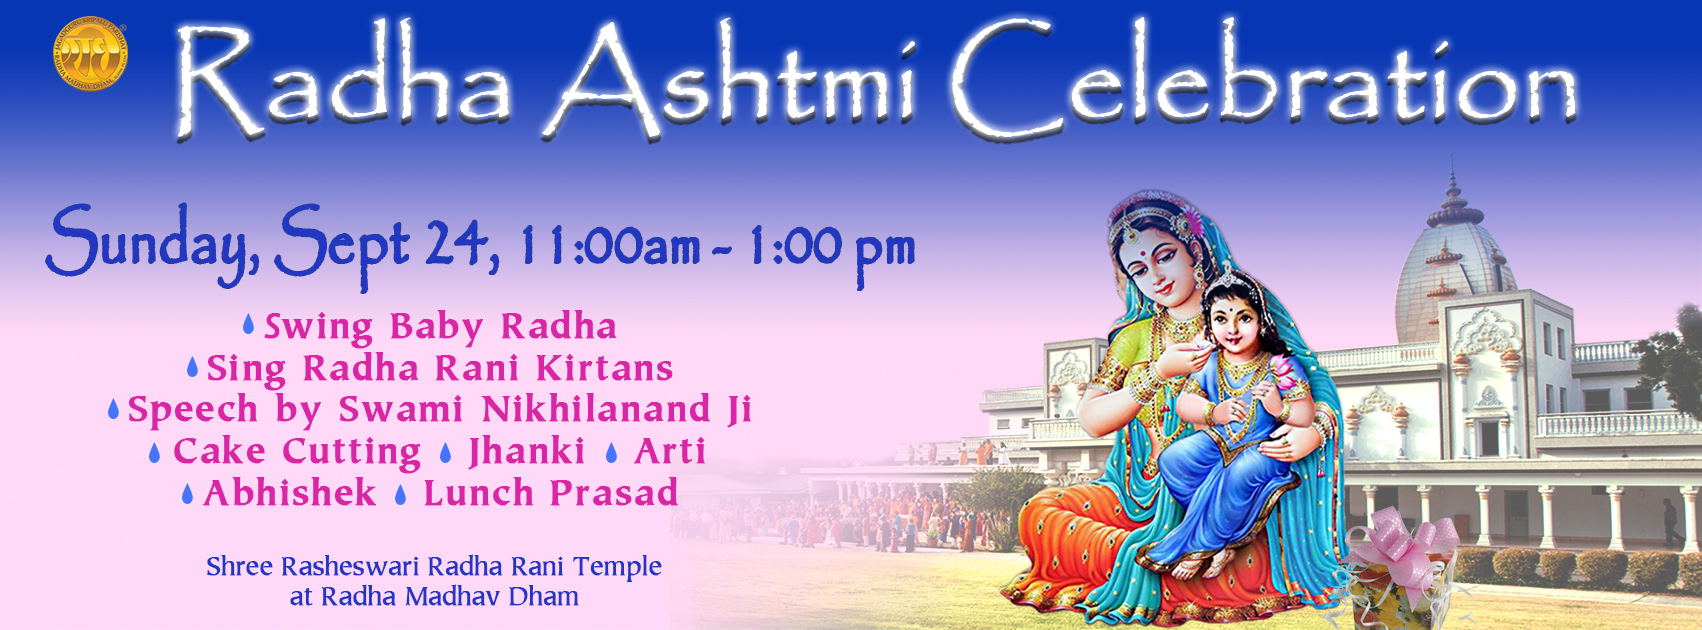 Radha Ashtmi fb Gen 11am- 1pm